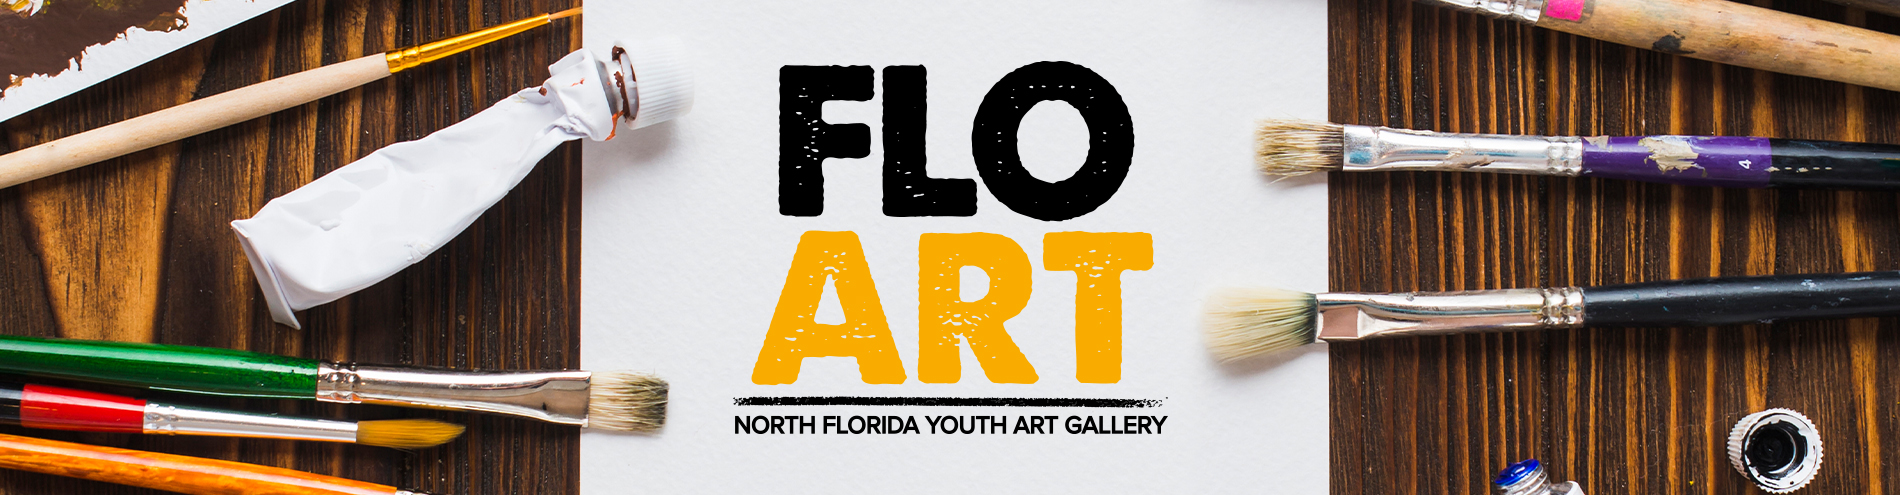 FLO-ART Art Contest Header